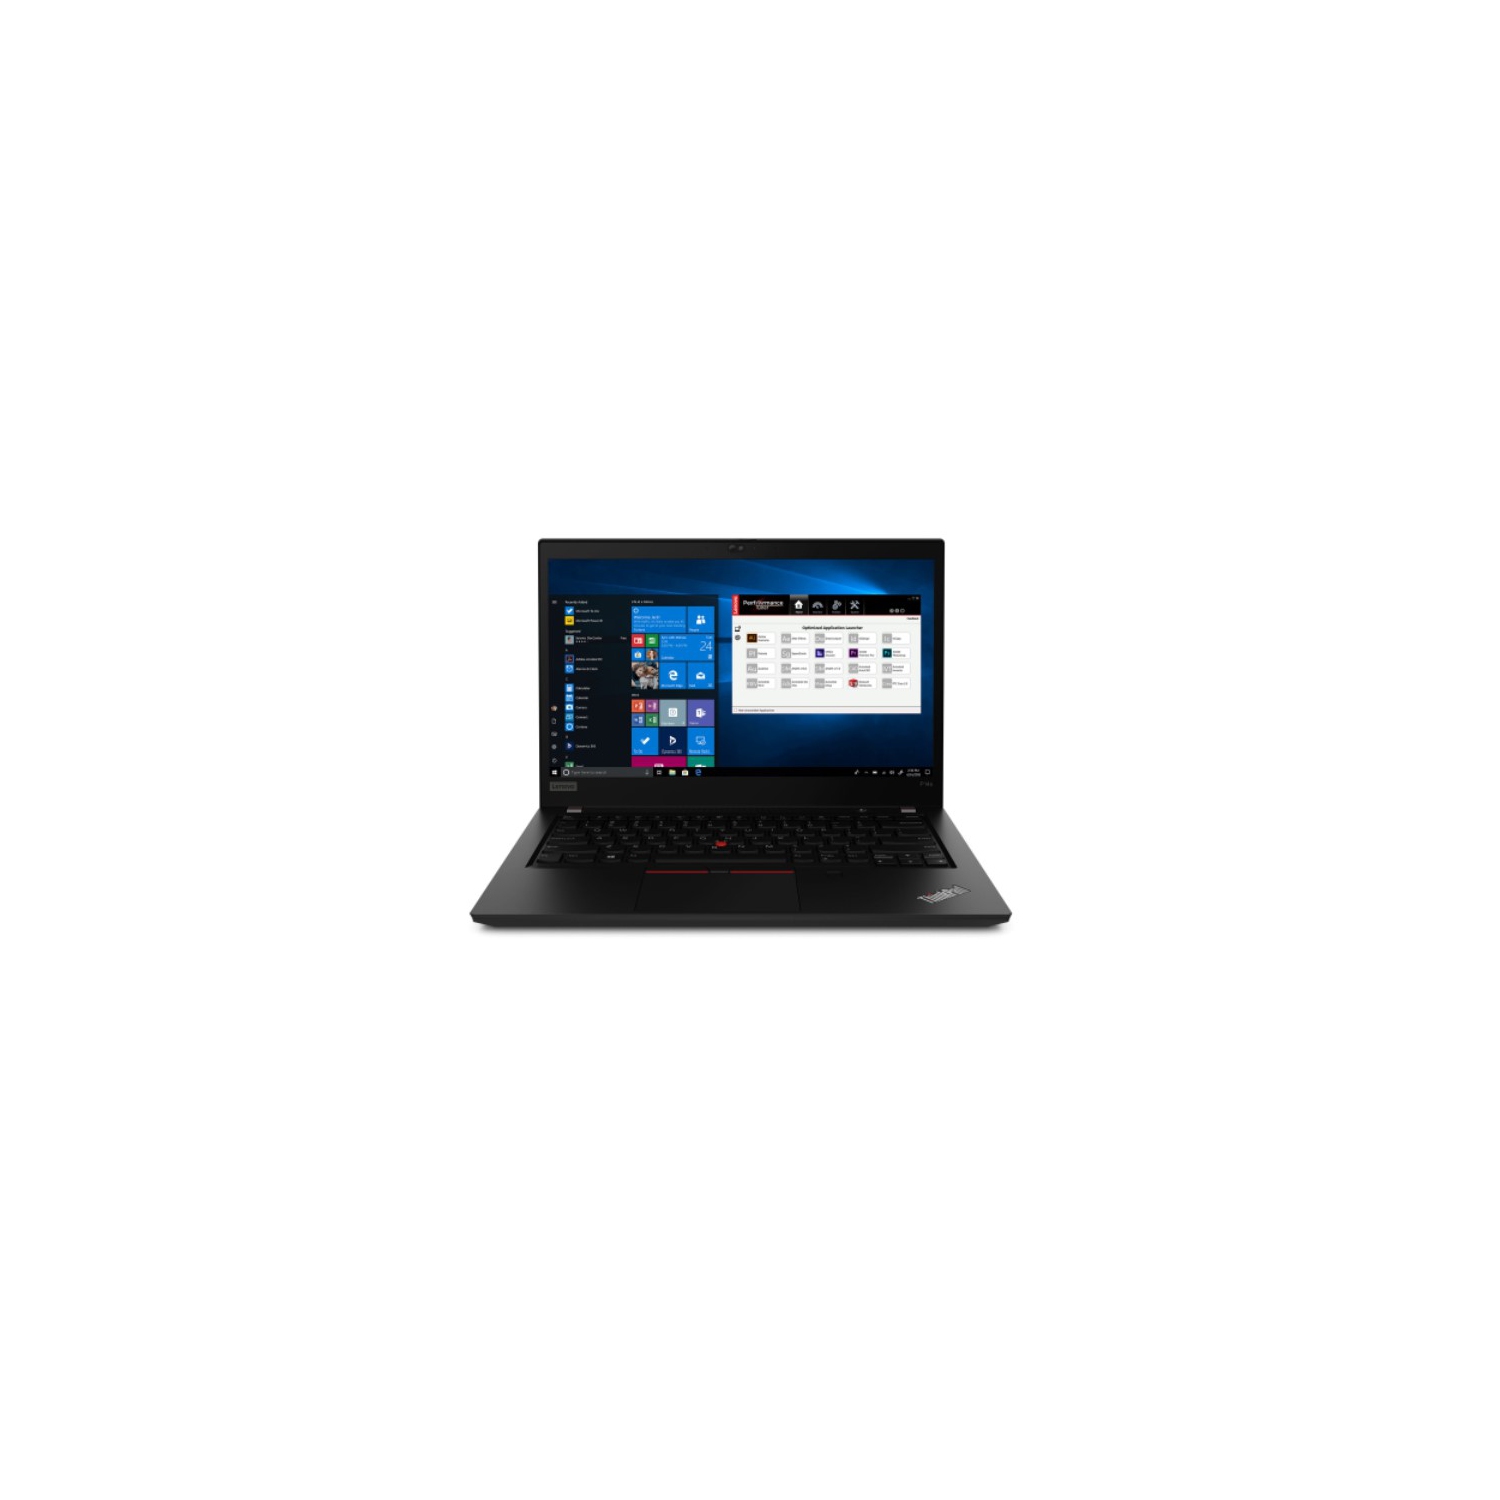 Lenovo 14" ThinkPad E14 Gen 2 Touchscreen Laptop (Intel Core i7-1165G7, 16GB RAM, 1TB SSD, Windows 10 Pro) - 20TA004LUS - Damaged Retail Box